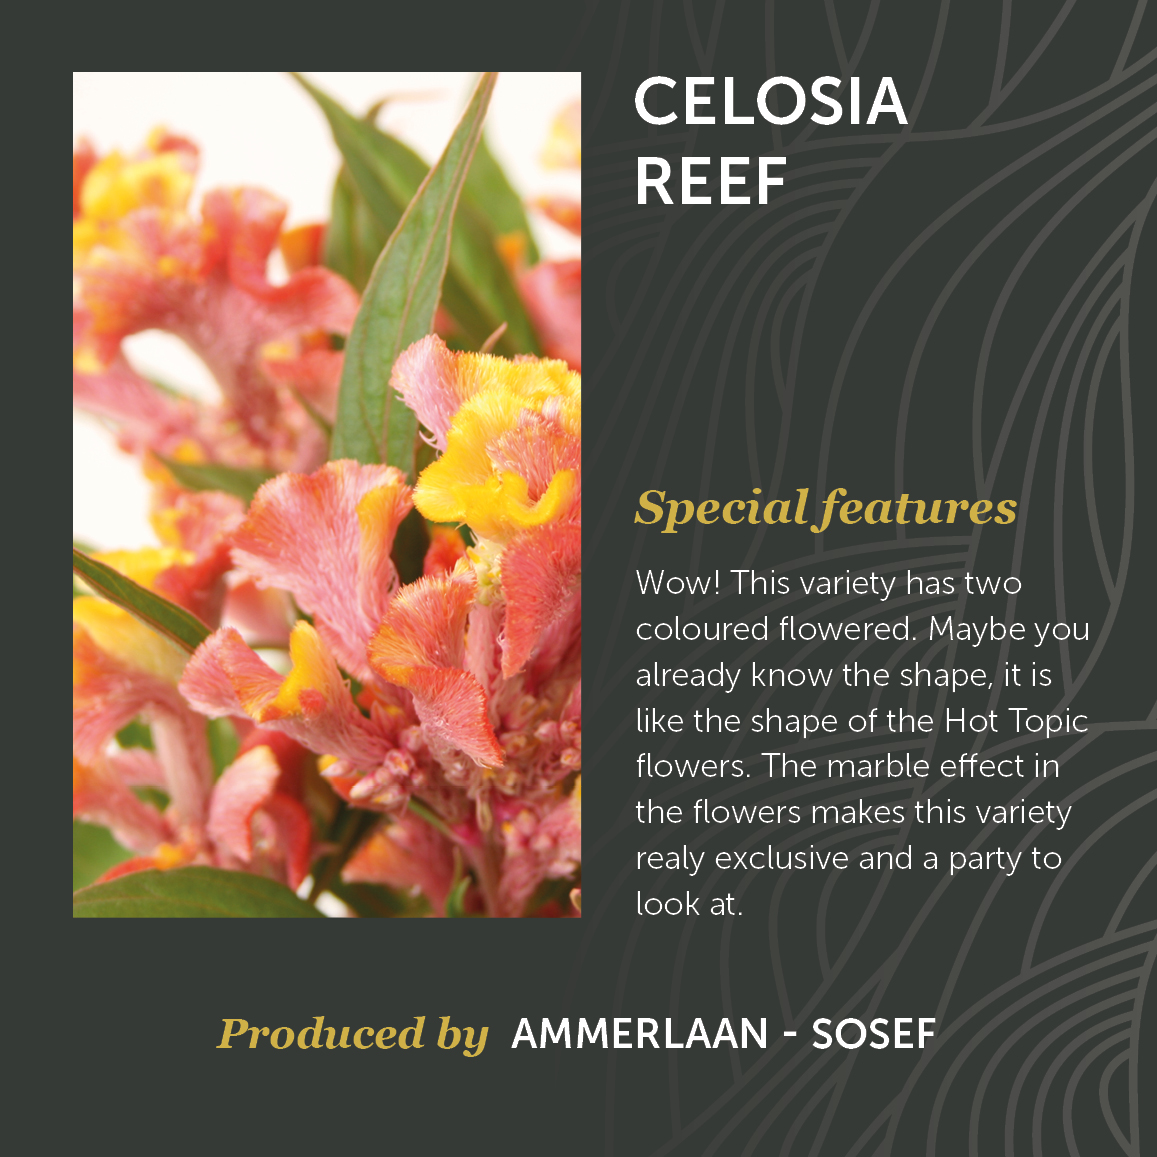 Celosia Reef